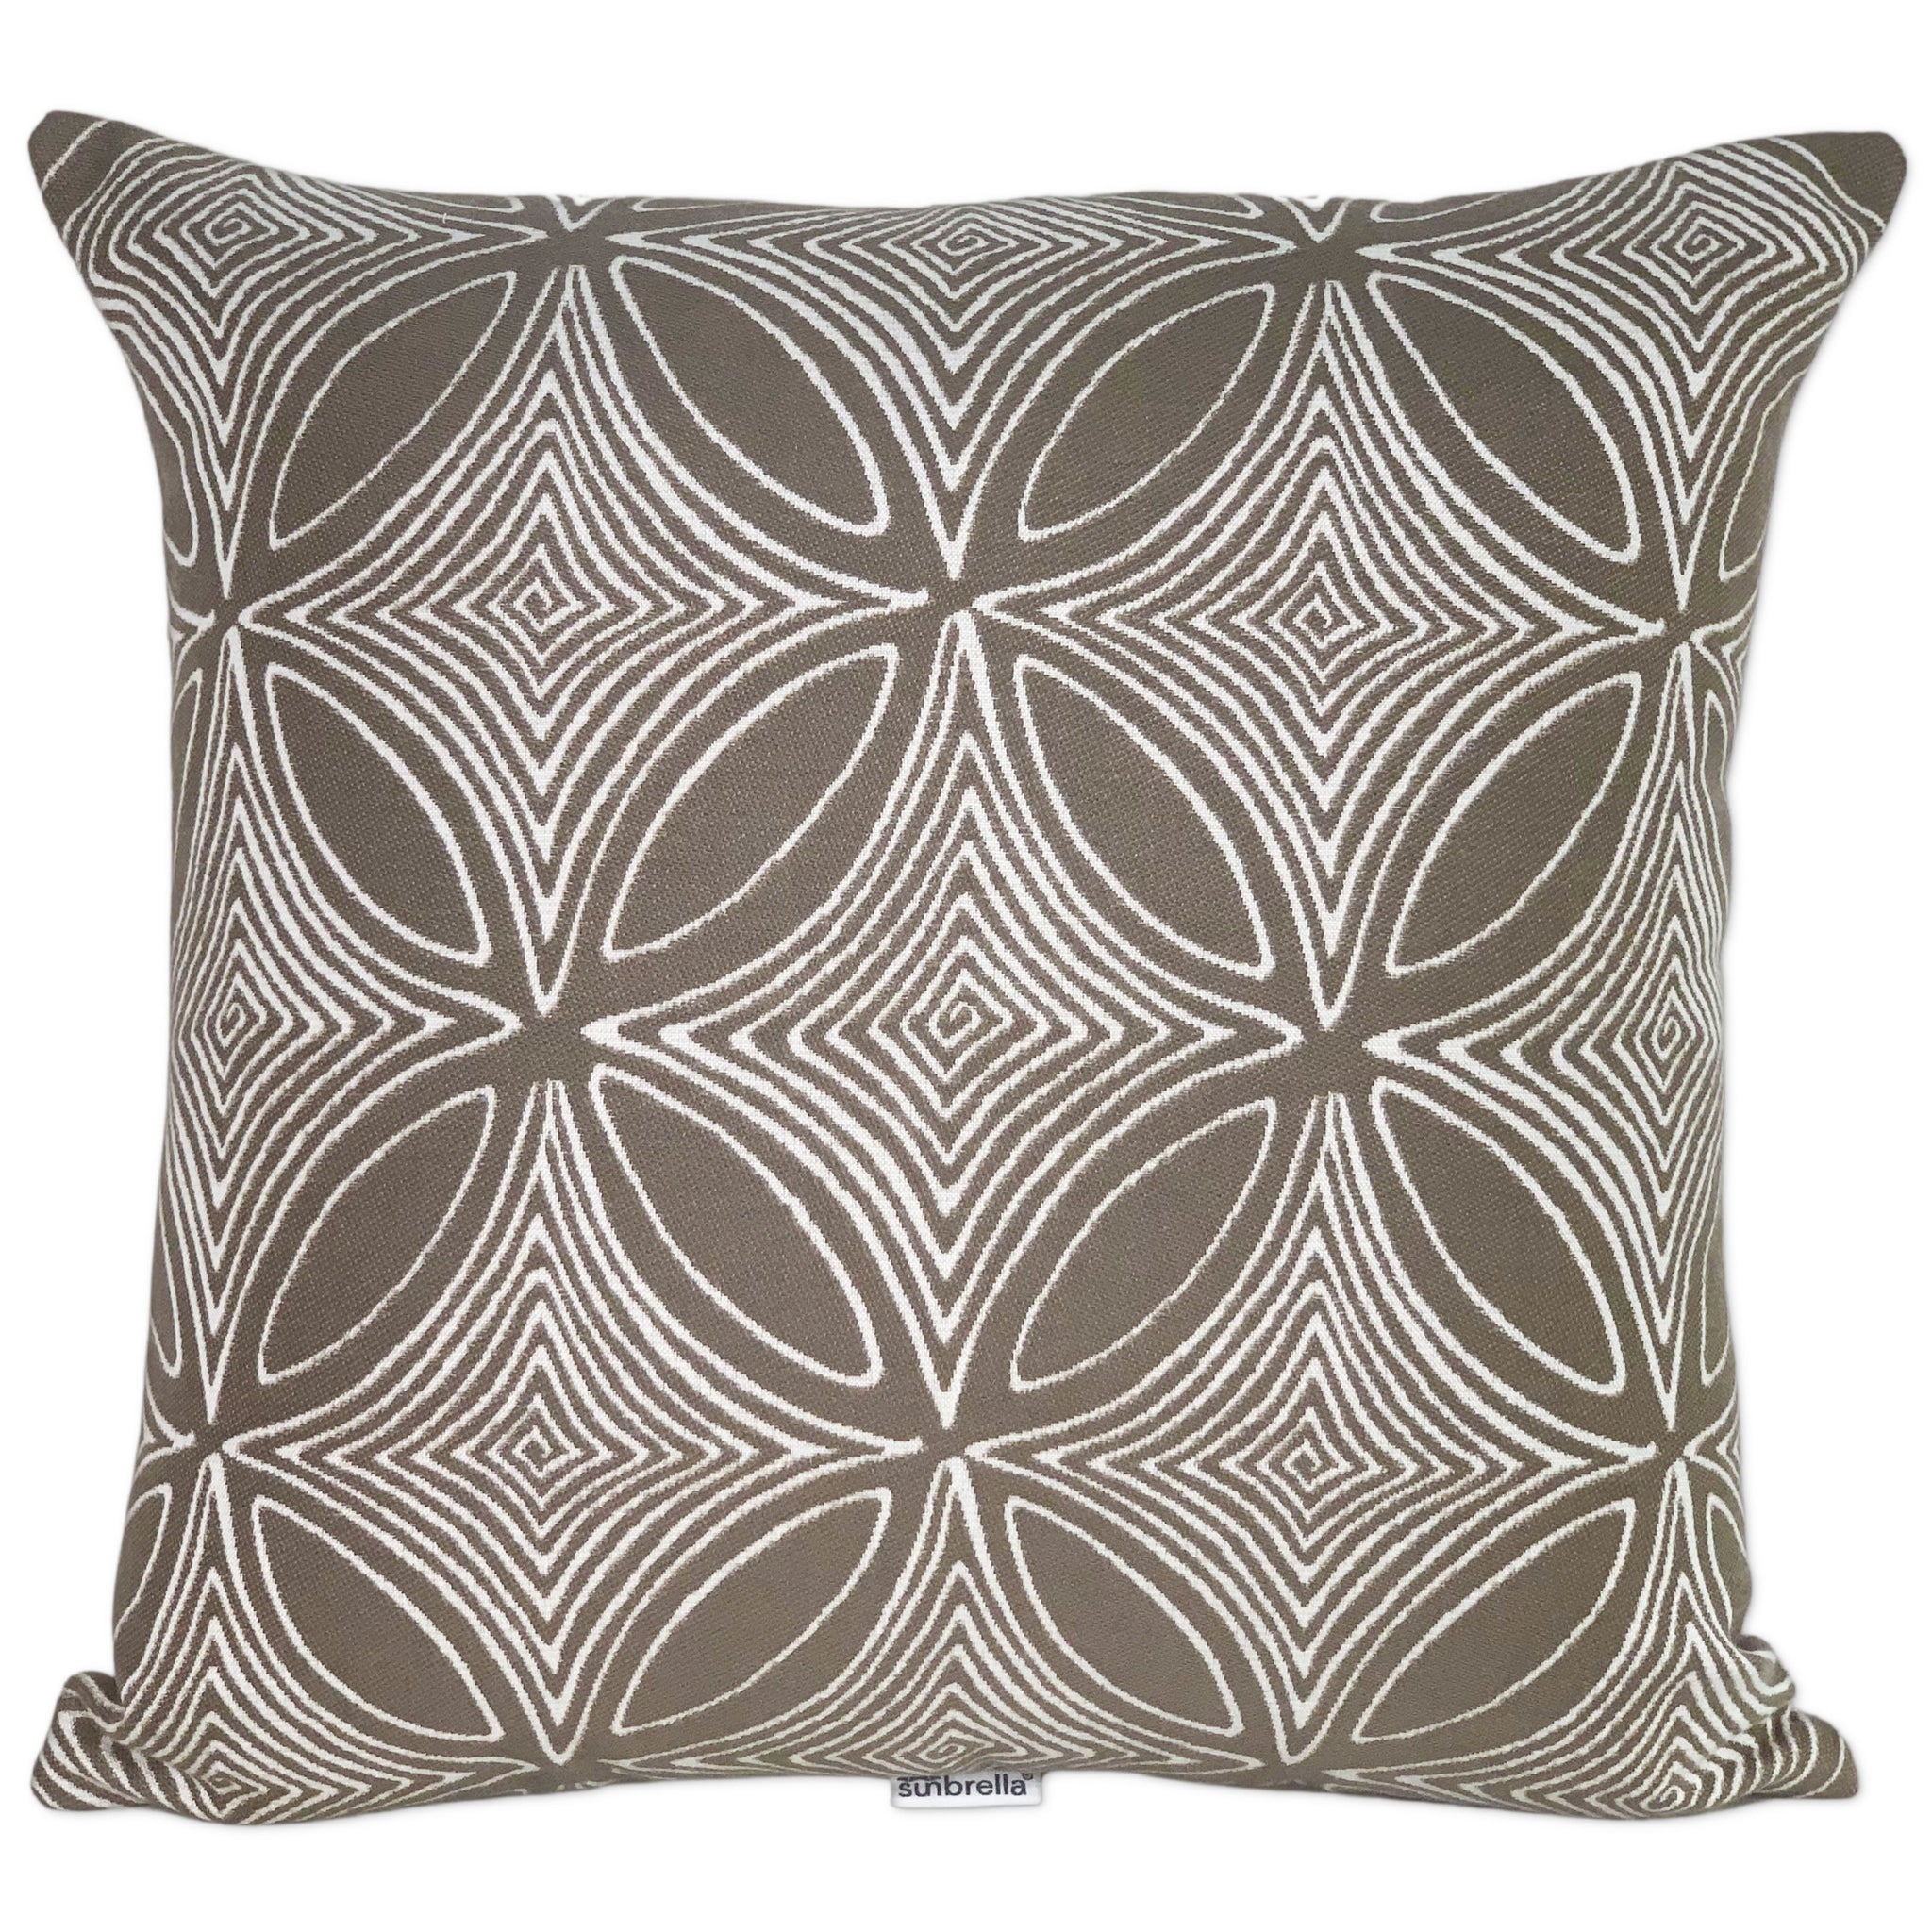 Sunbrella® Mandala Pillow Cover in Birch